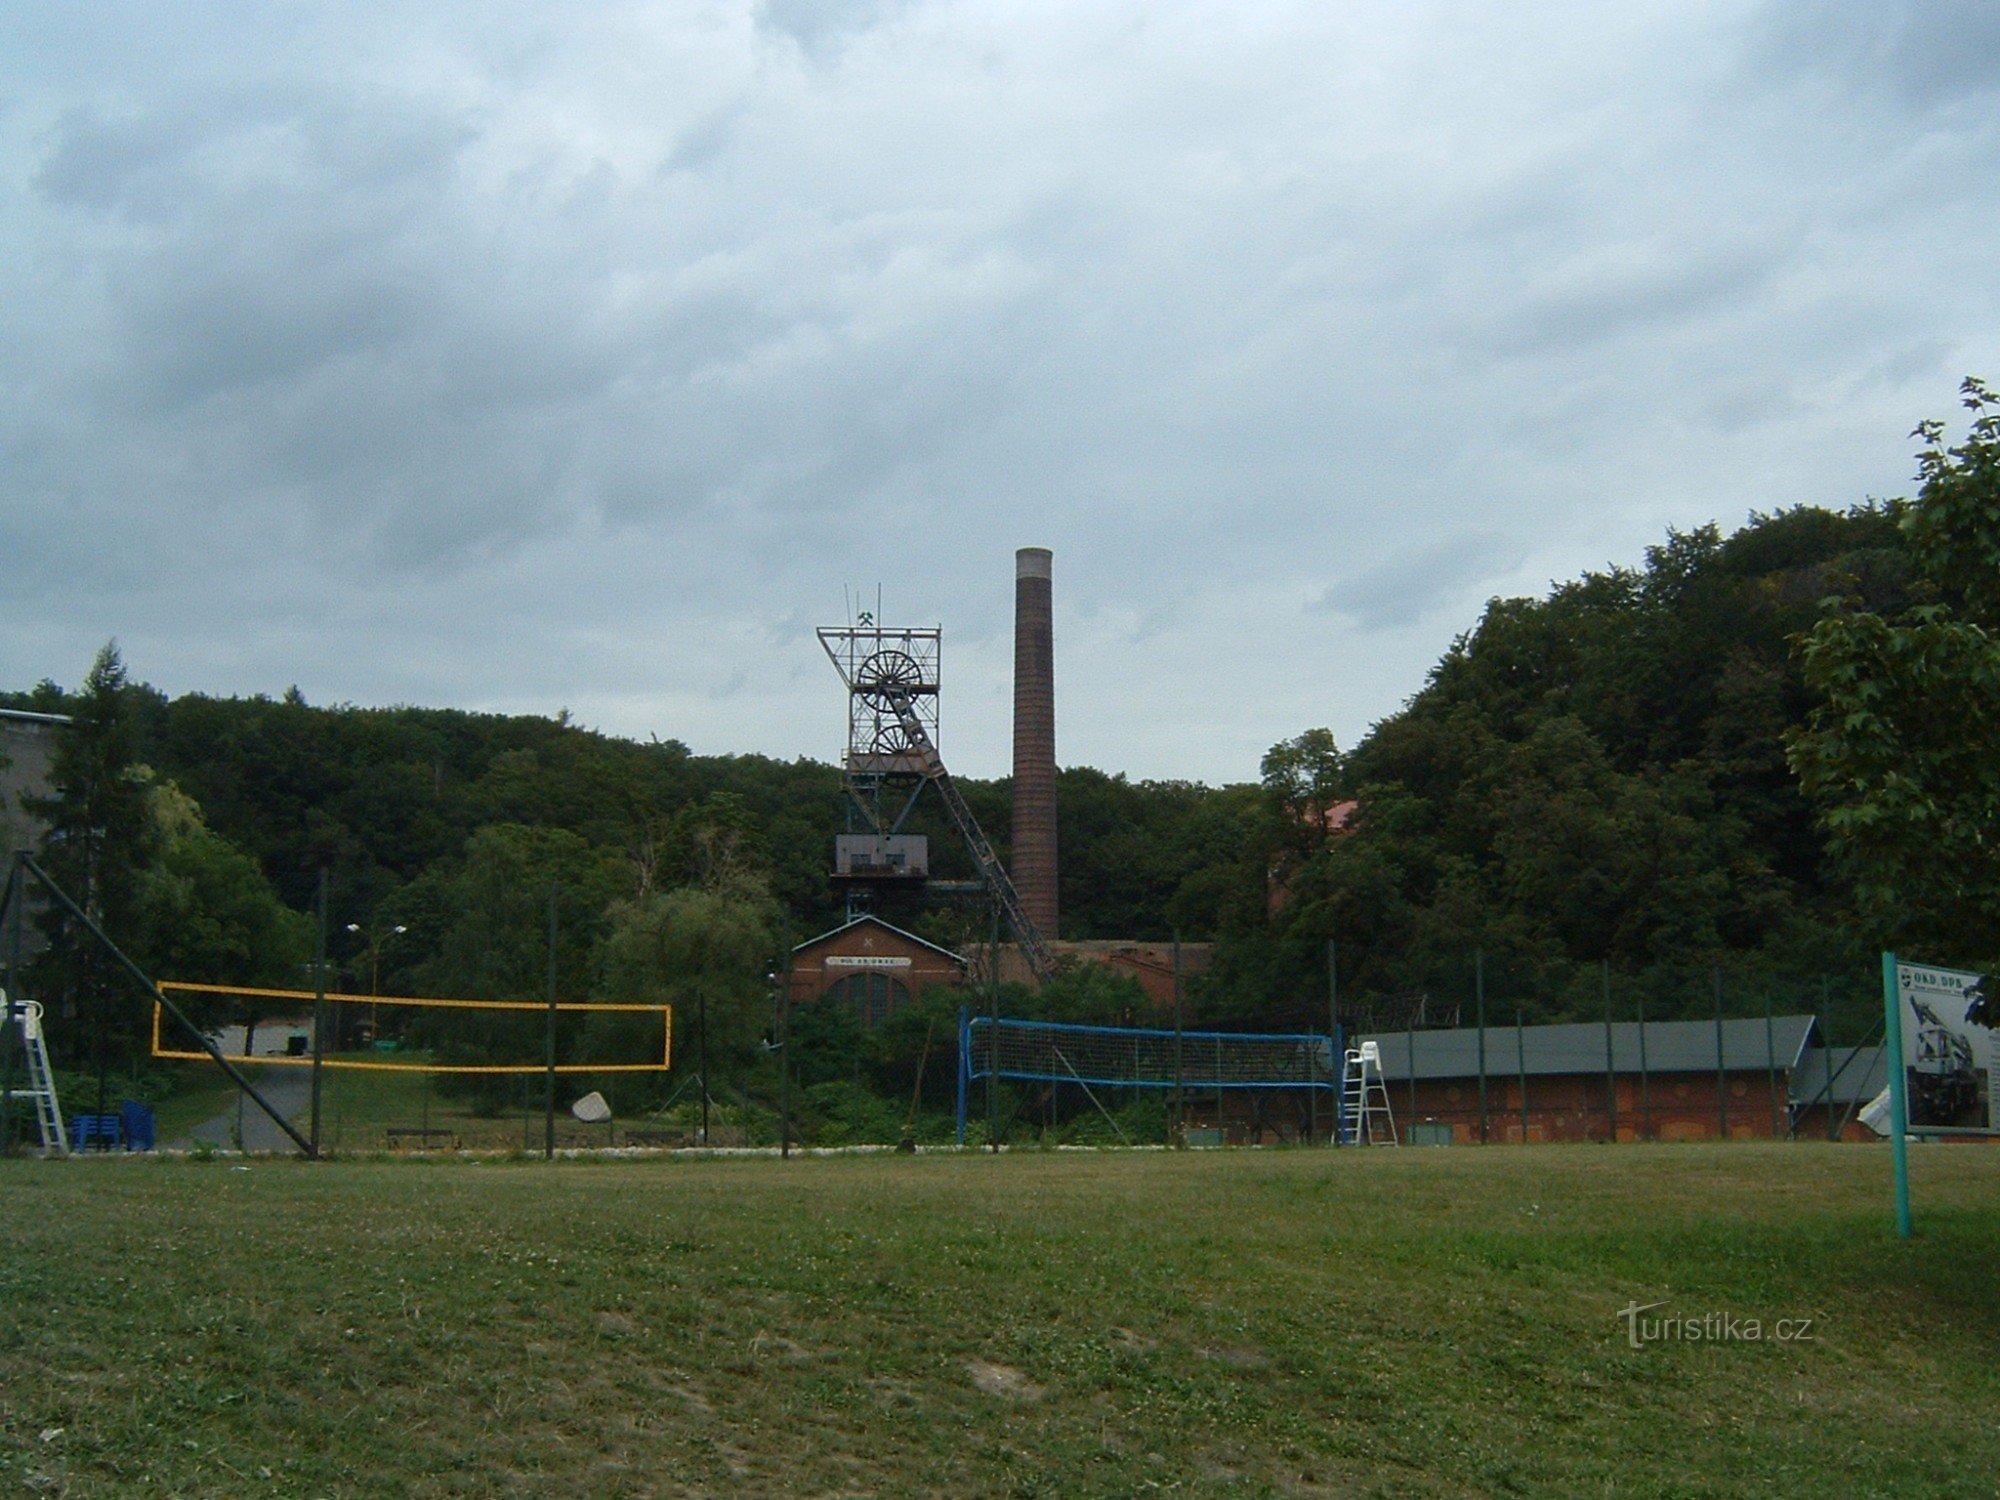 Minemuseum Landek Ostrava